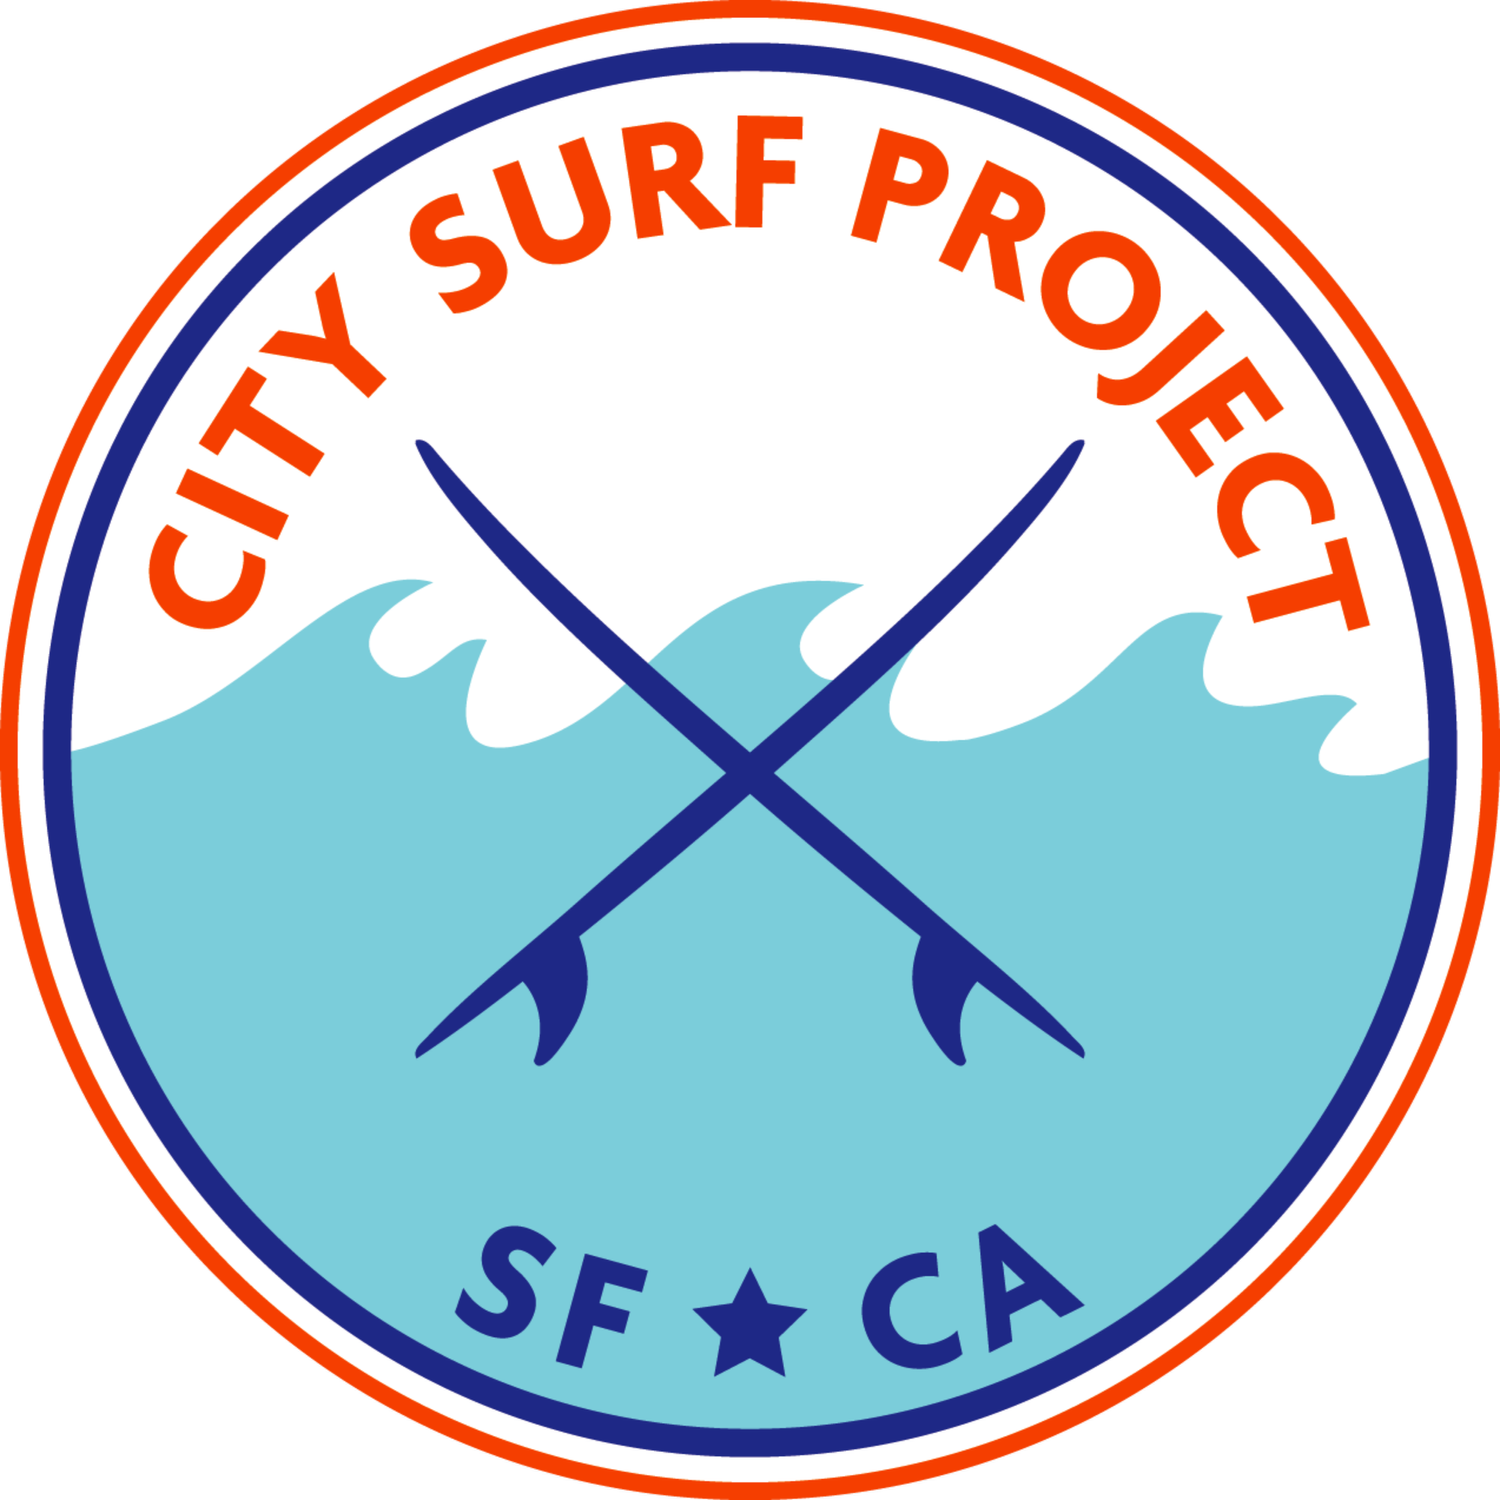 City Surf Project